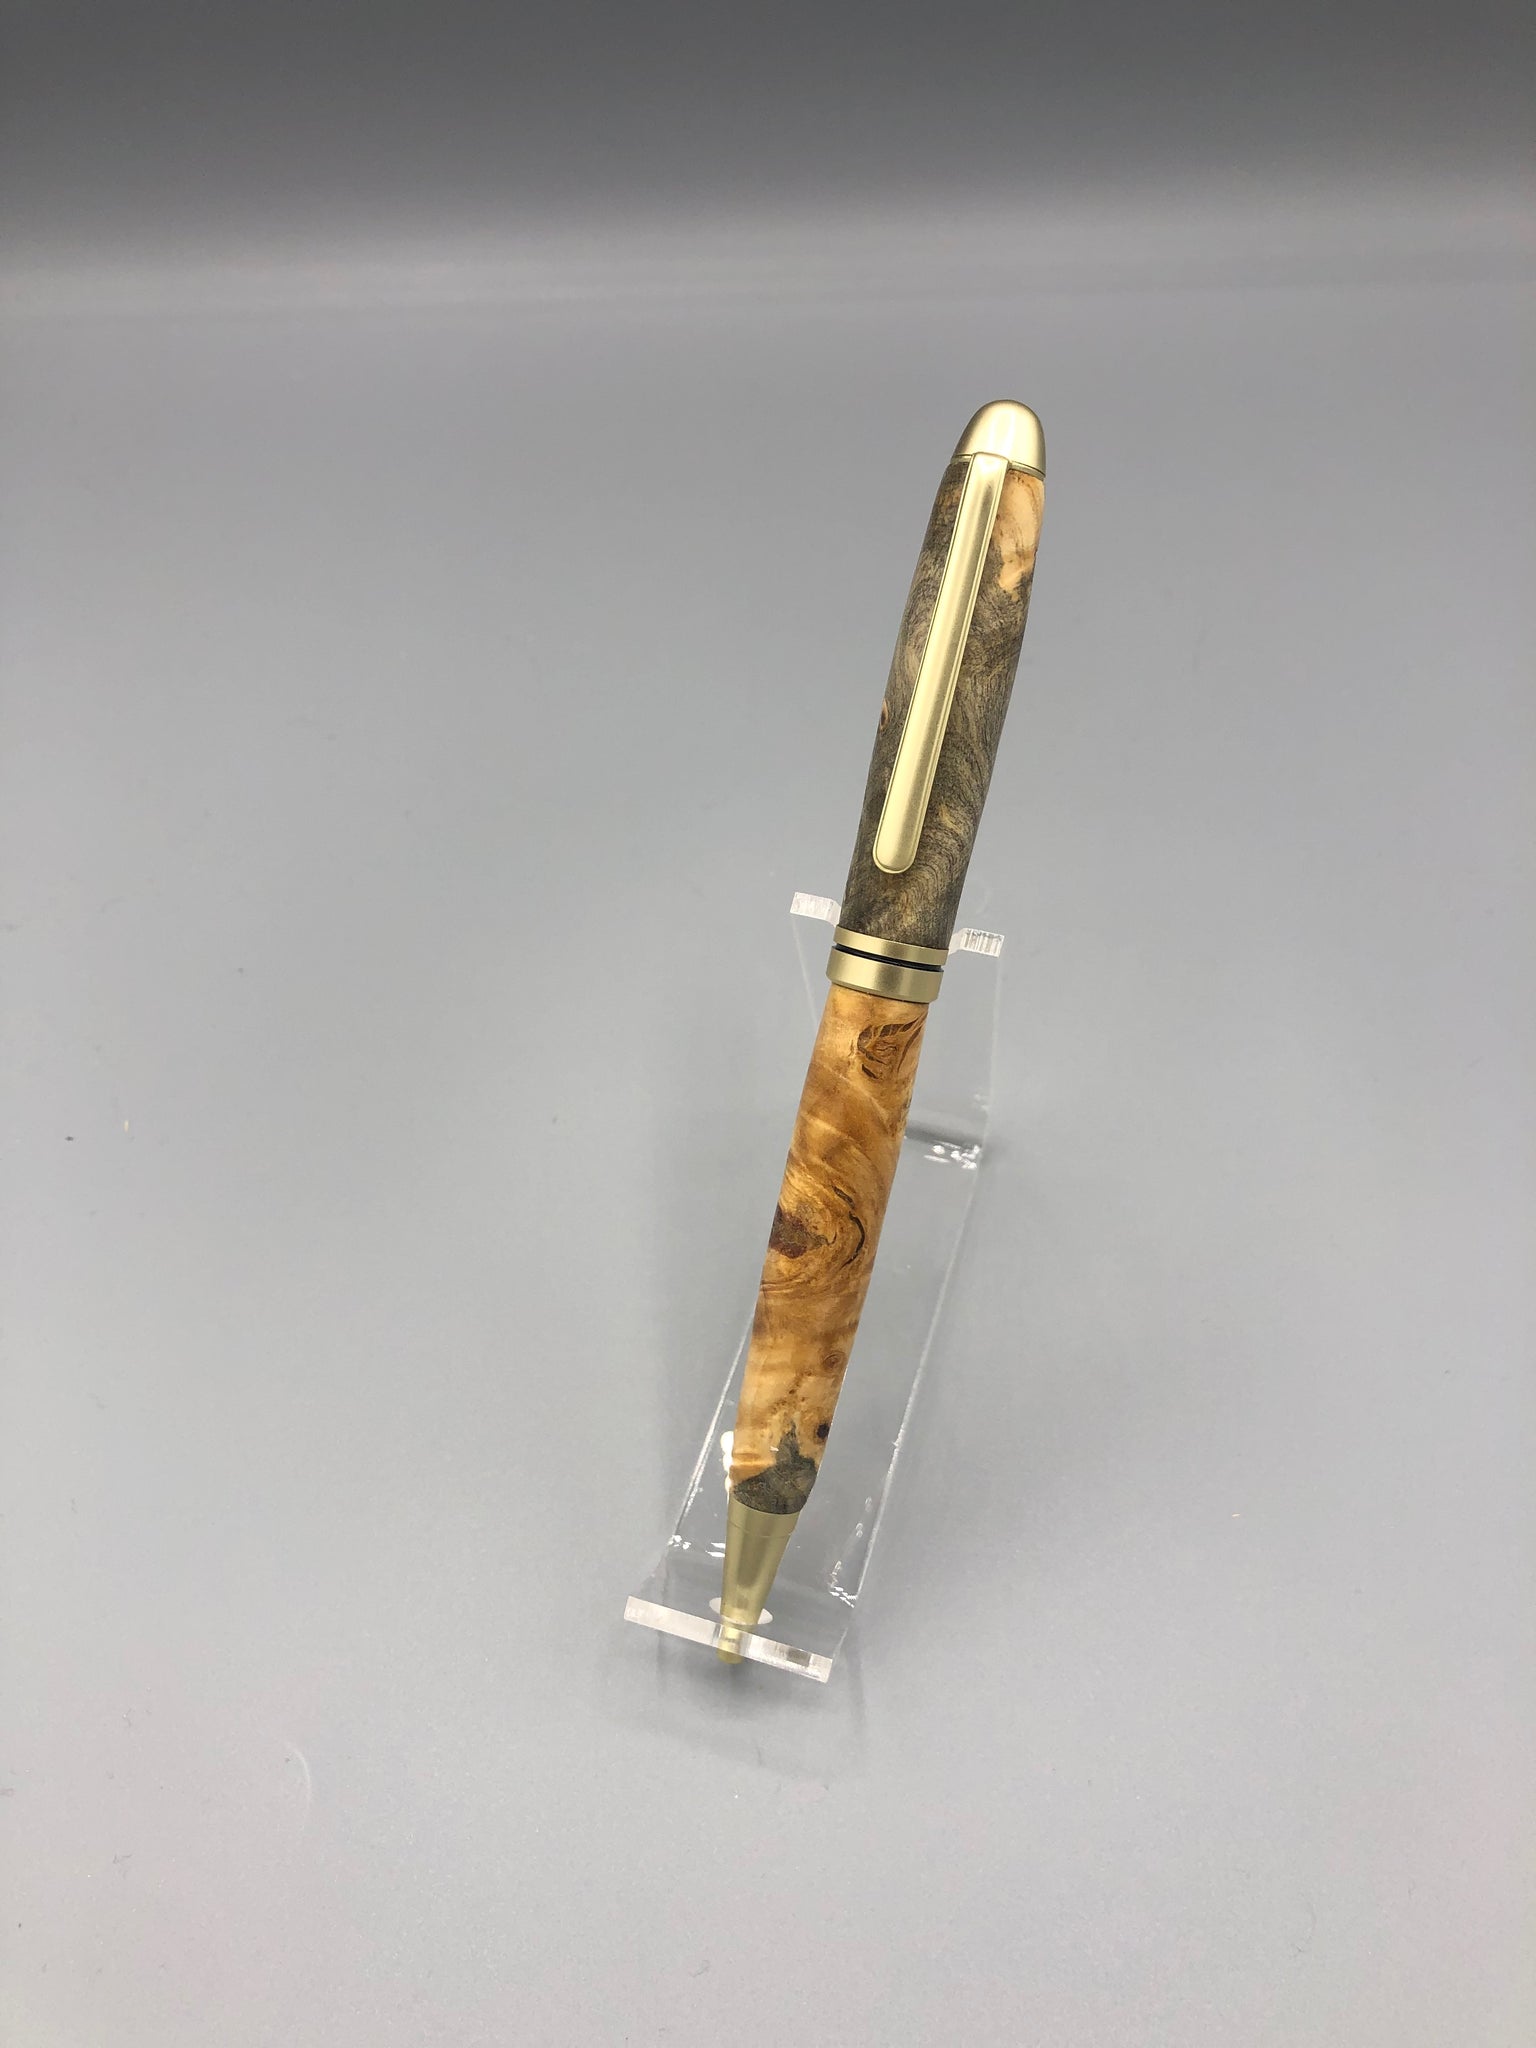 Retractable Cedar Wood Pen – Maple Staple